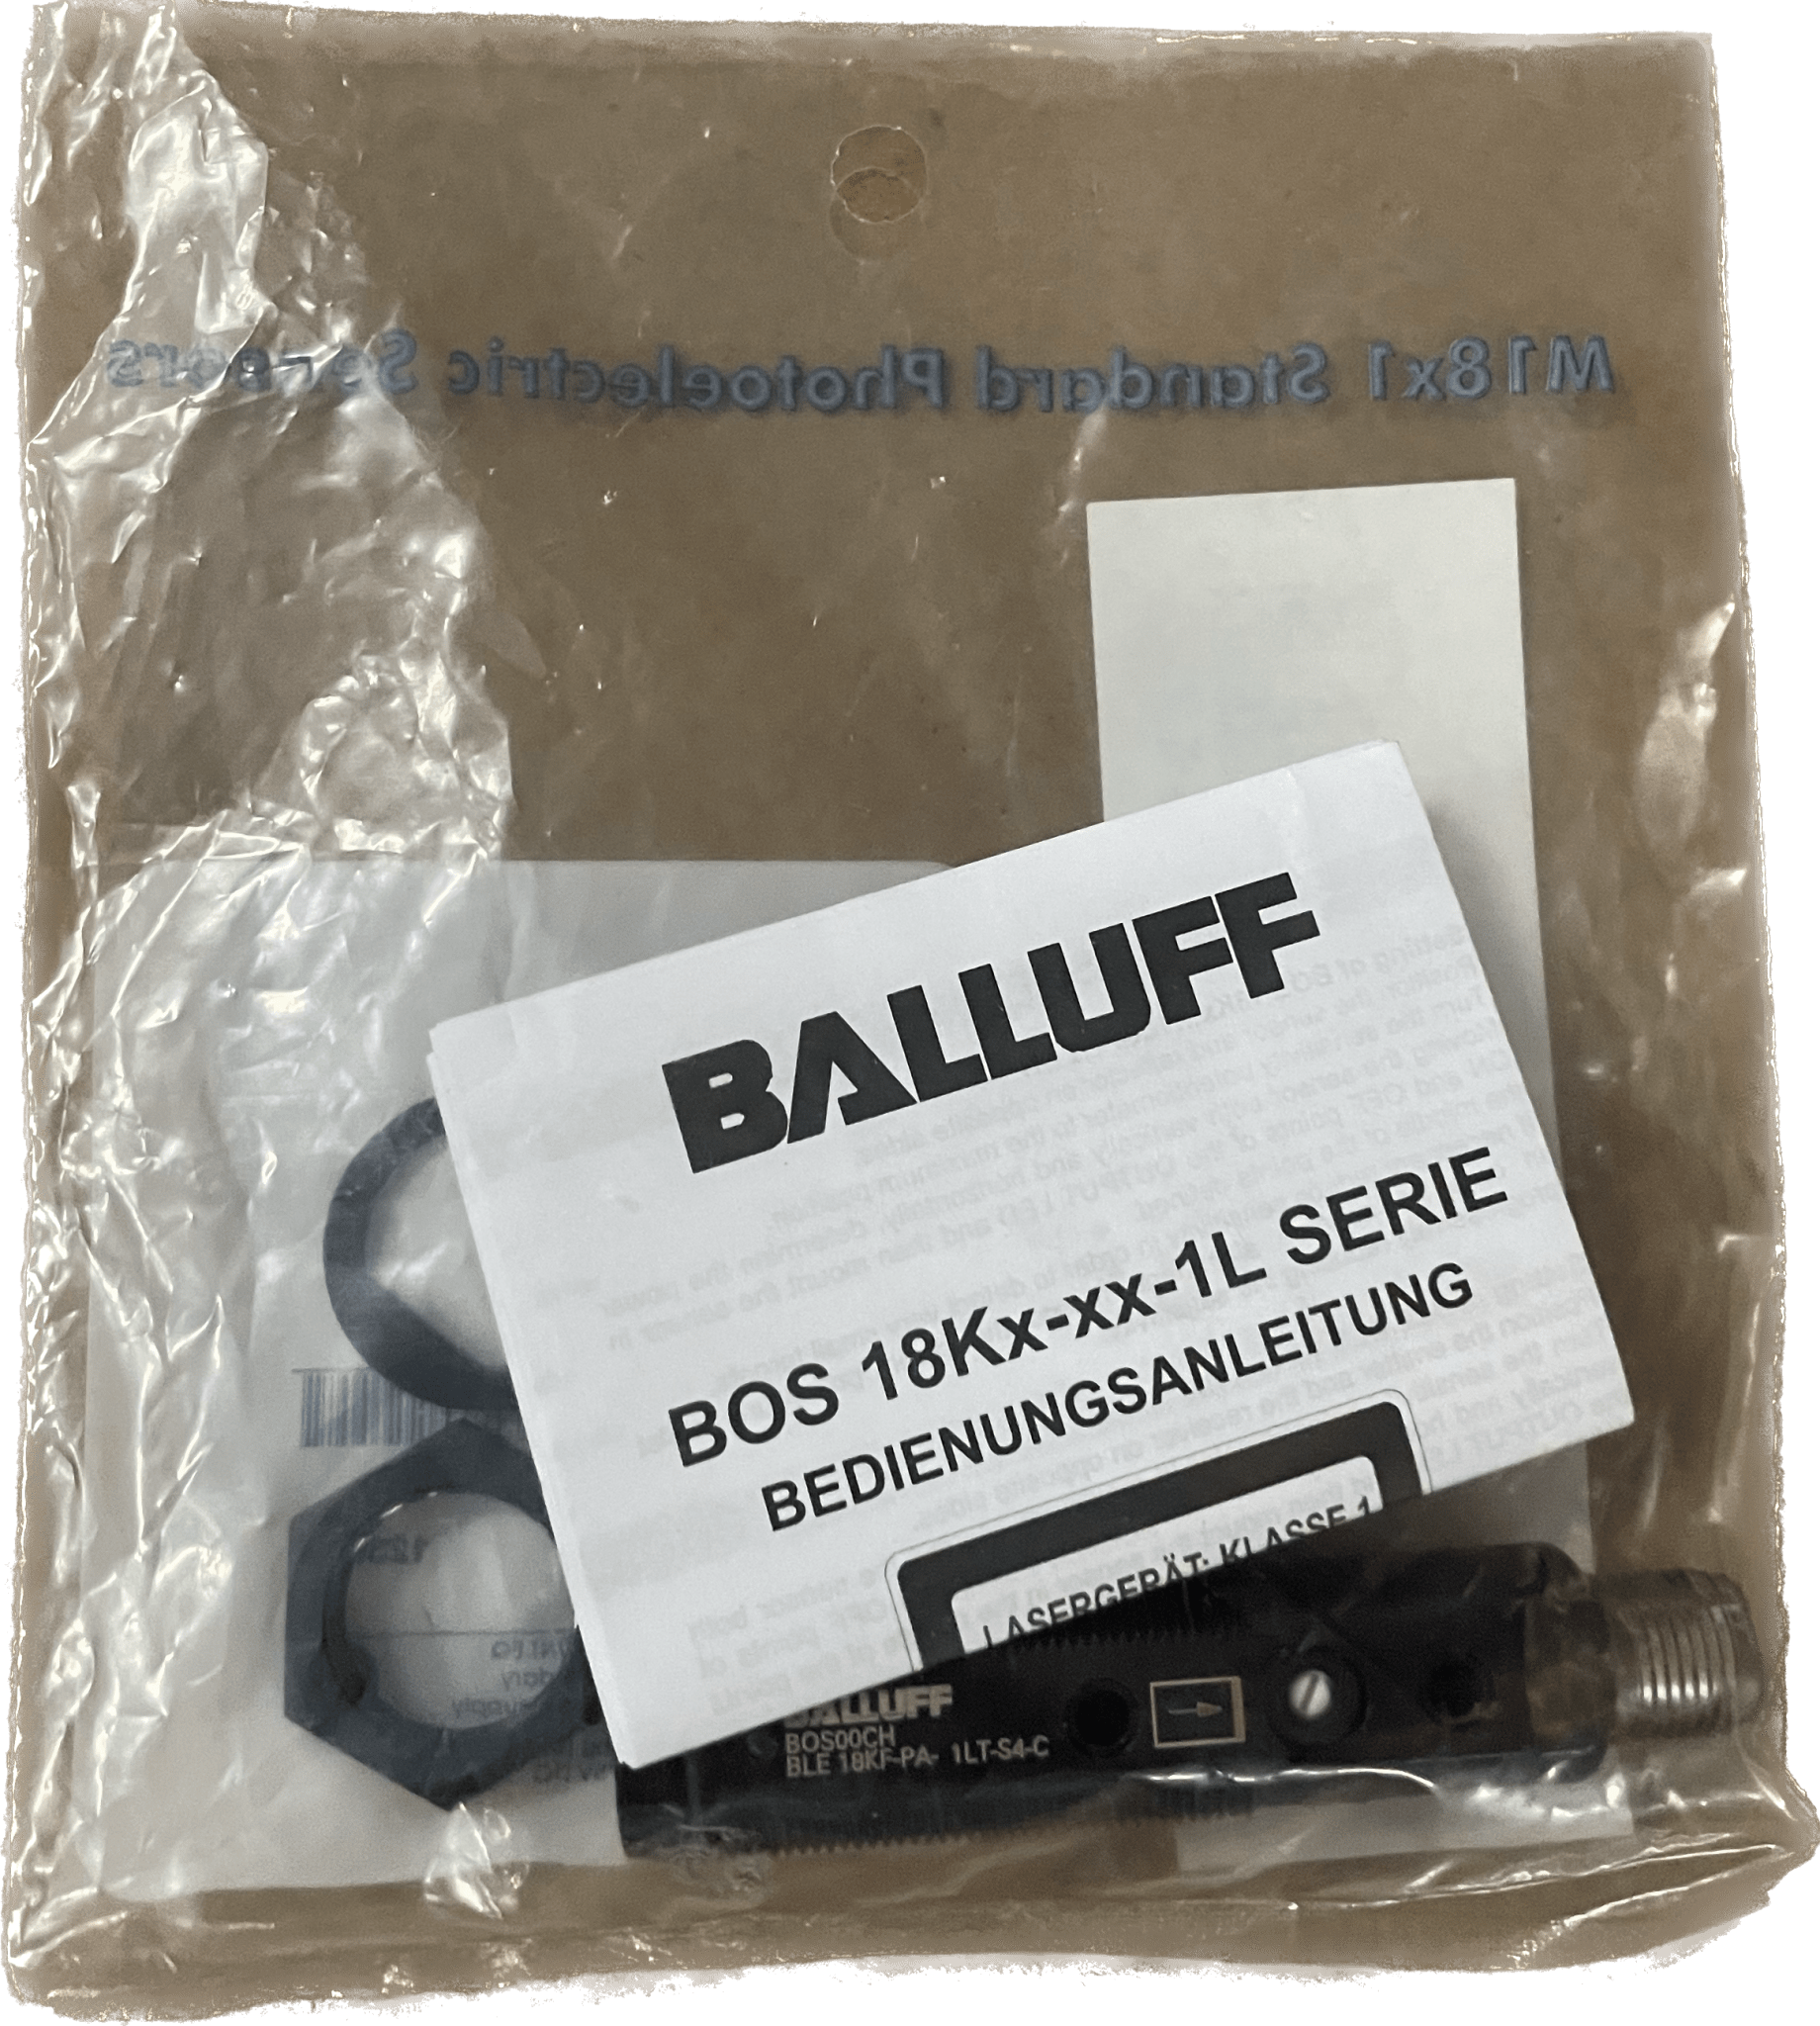 BALLUFF Einweglichtschranken BLE 18KF-PA-1LT-S4-C - #product_category# | Klenk Maschinenhandel